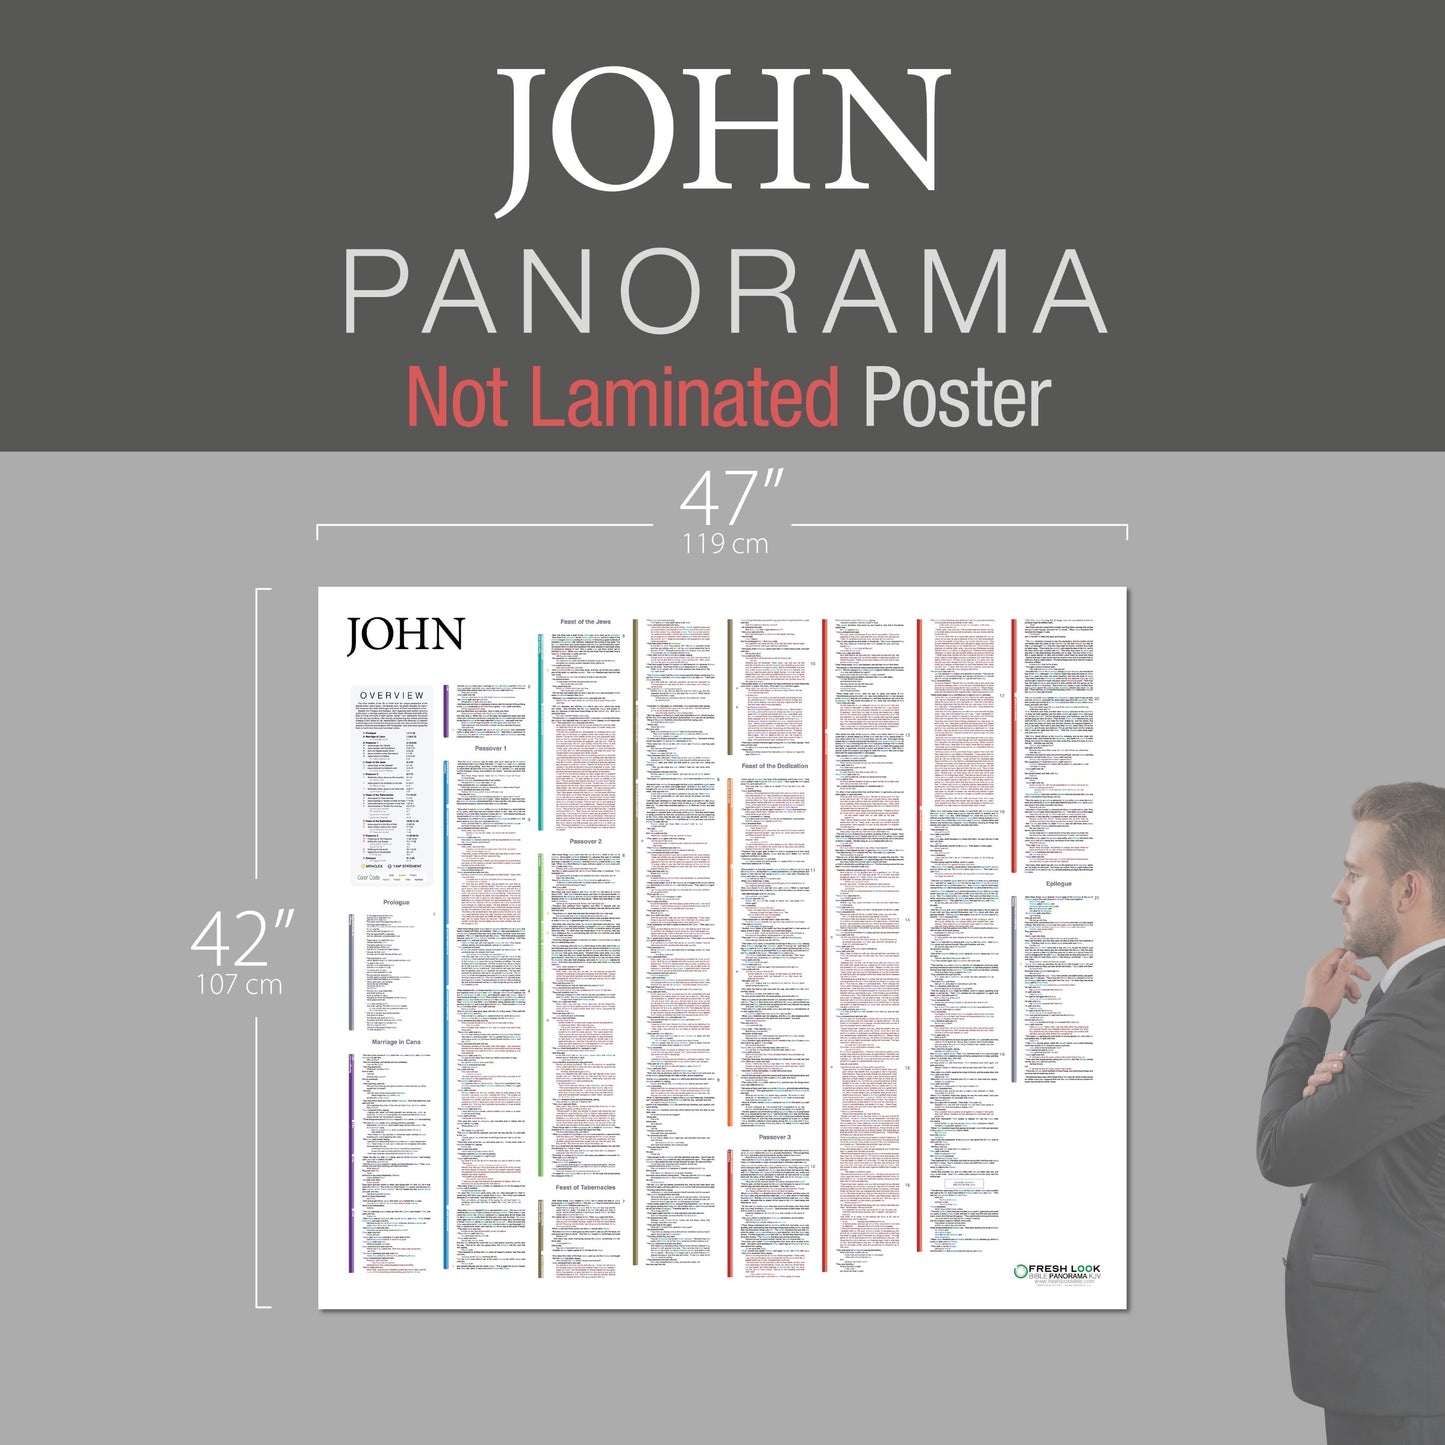 John Panorama Not Laminated